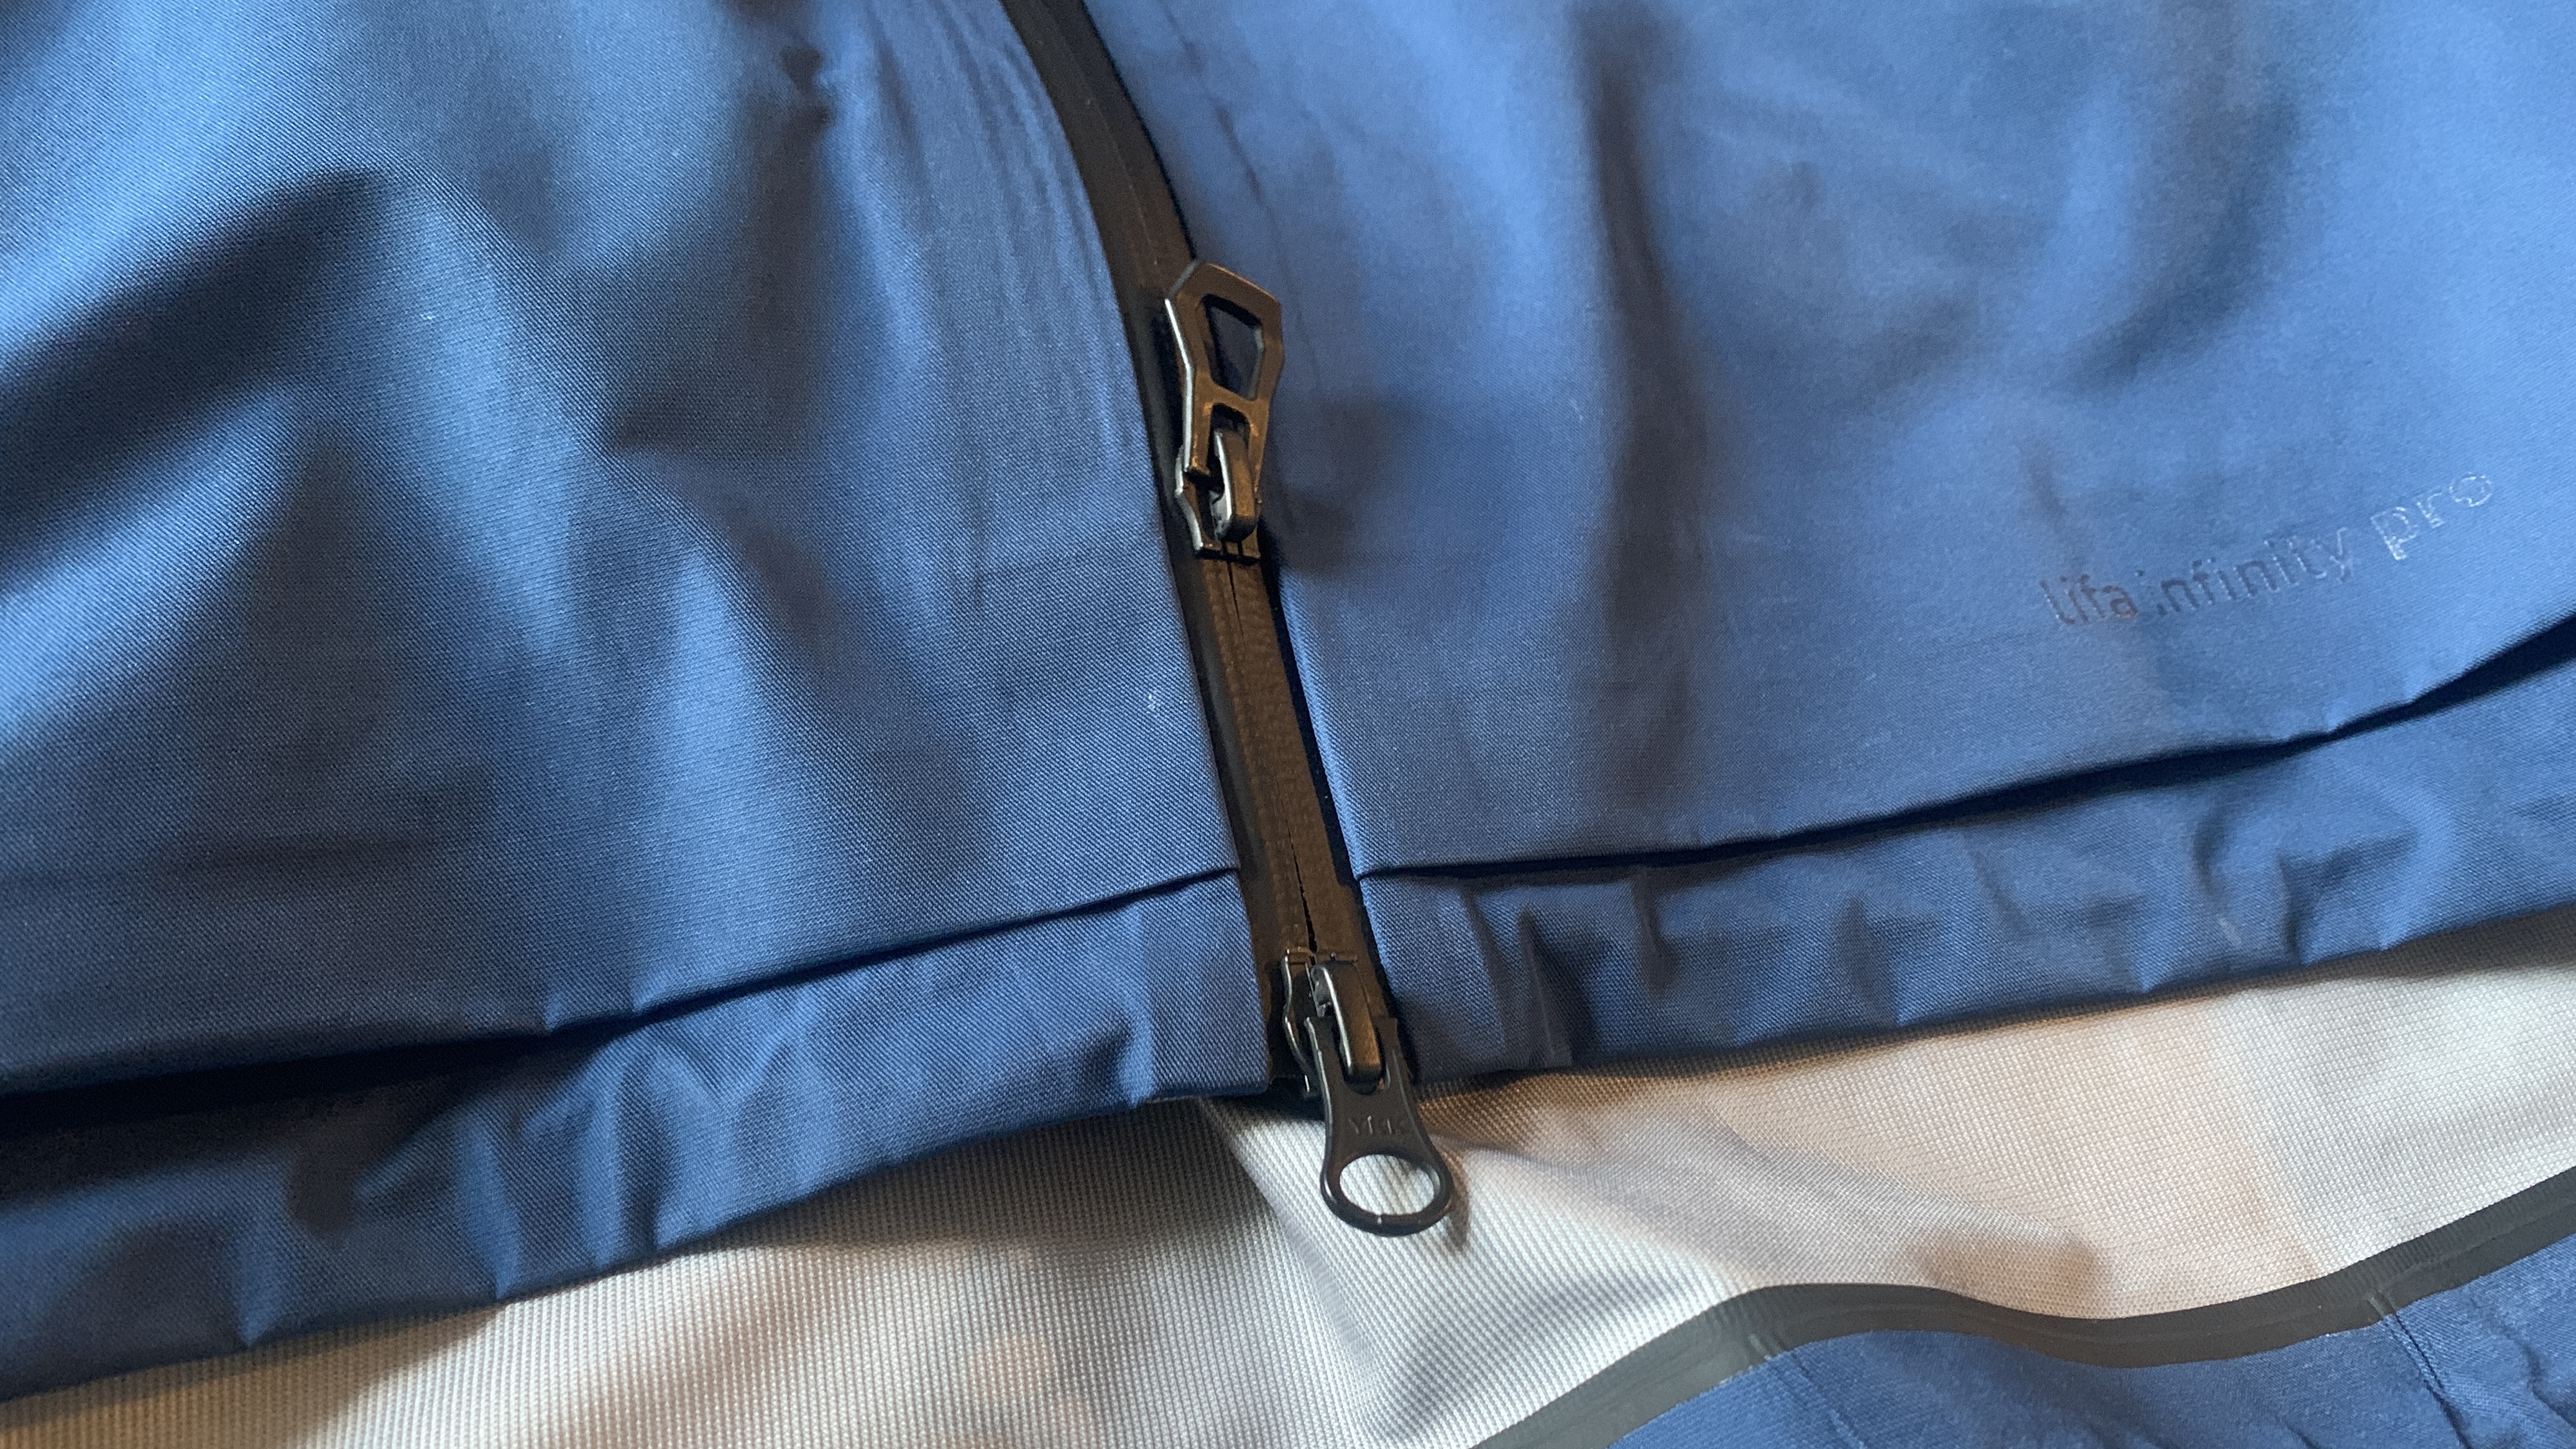 How to Unzip a Double Zipper